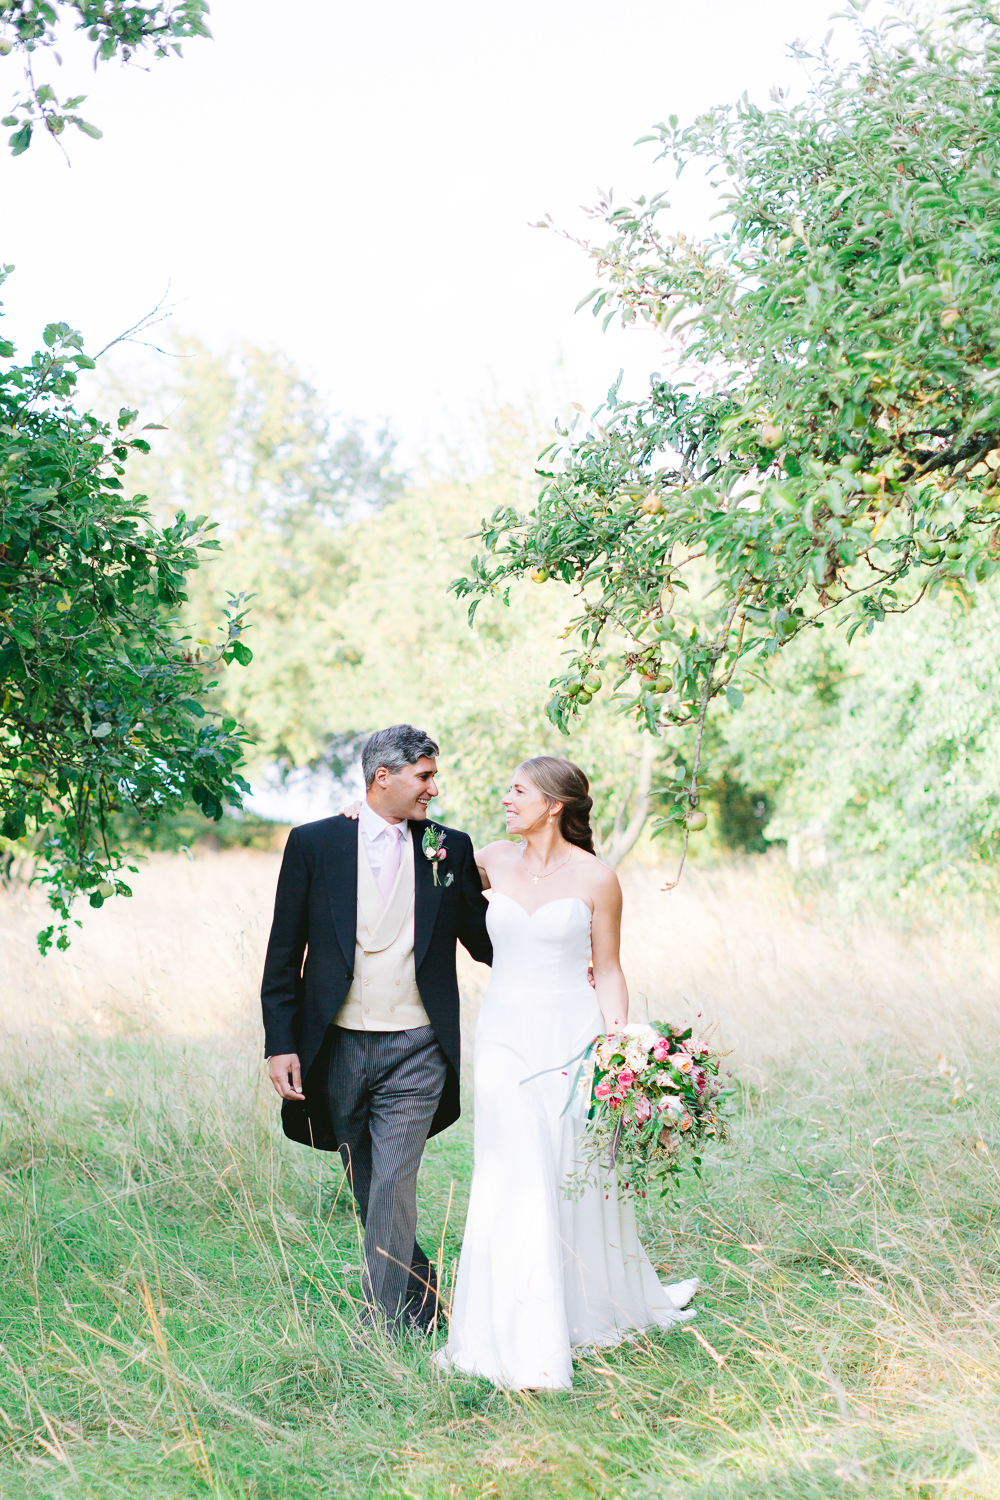 Elegant bride and groom walk through apple orchard on their wedding day